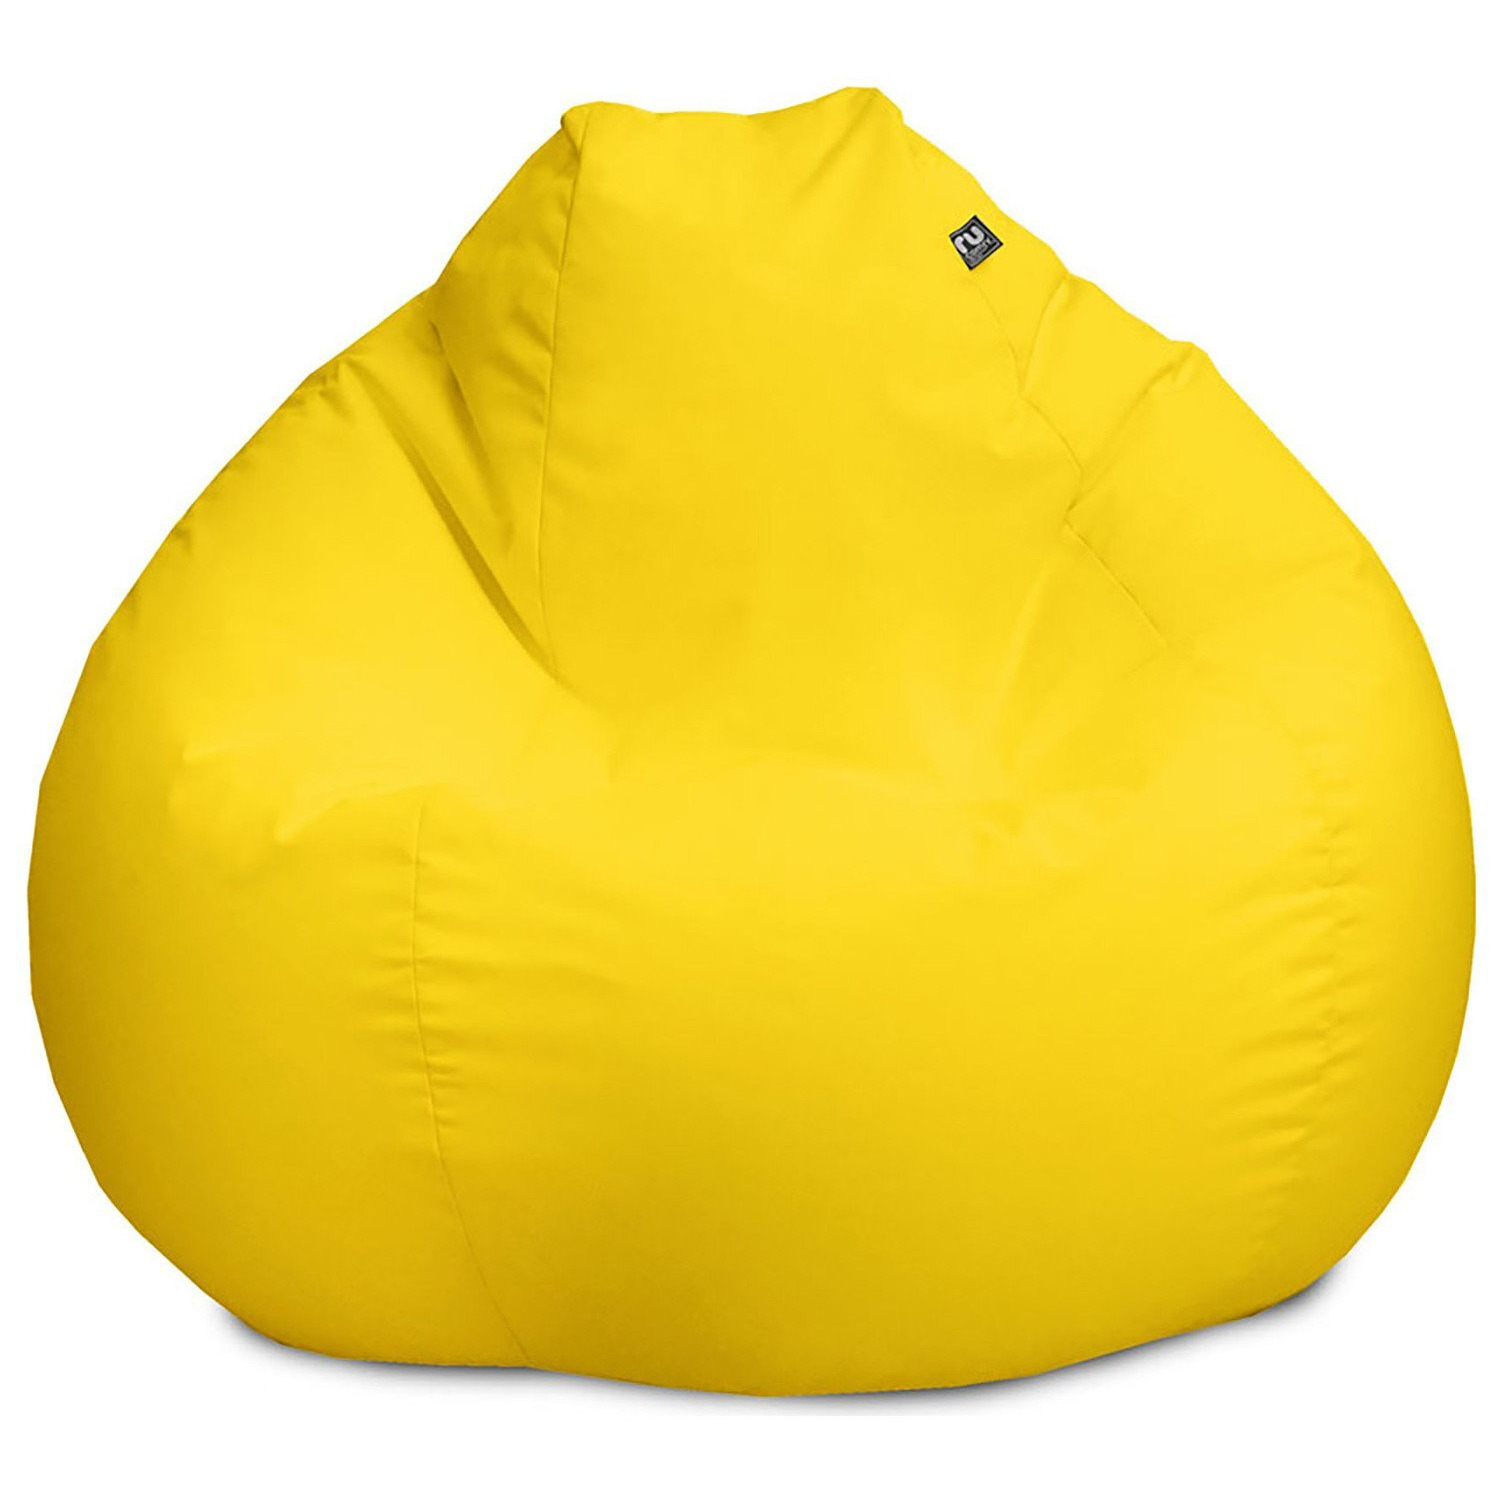 rucomfy Indoor Outdoor Bean Bag - Yellow - image 1